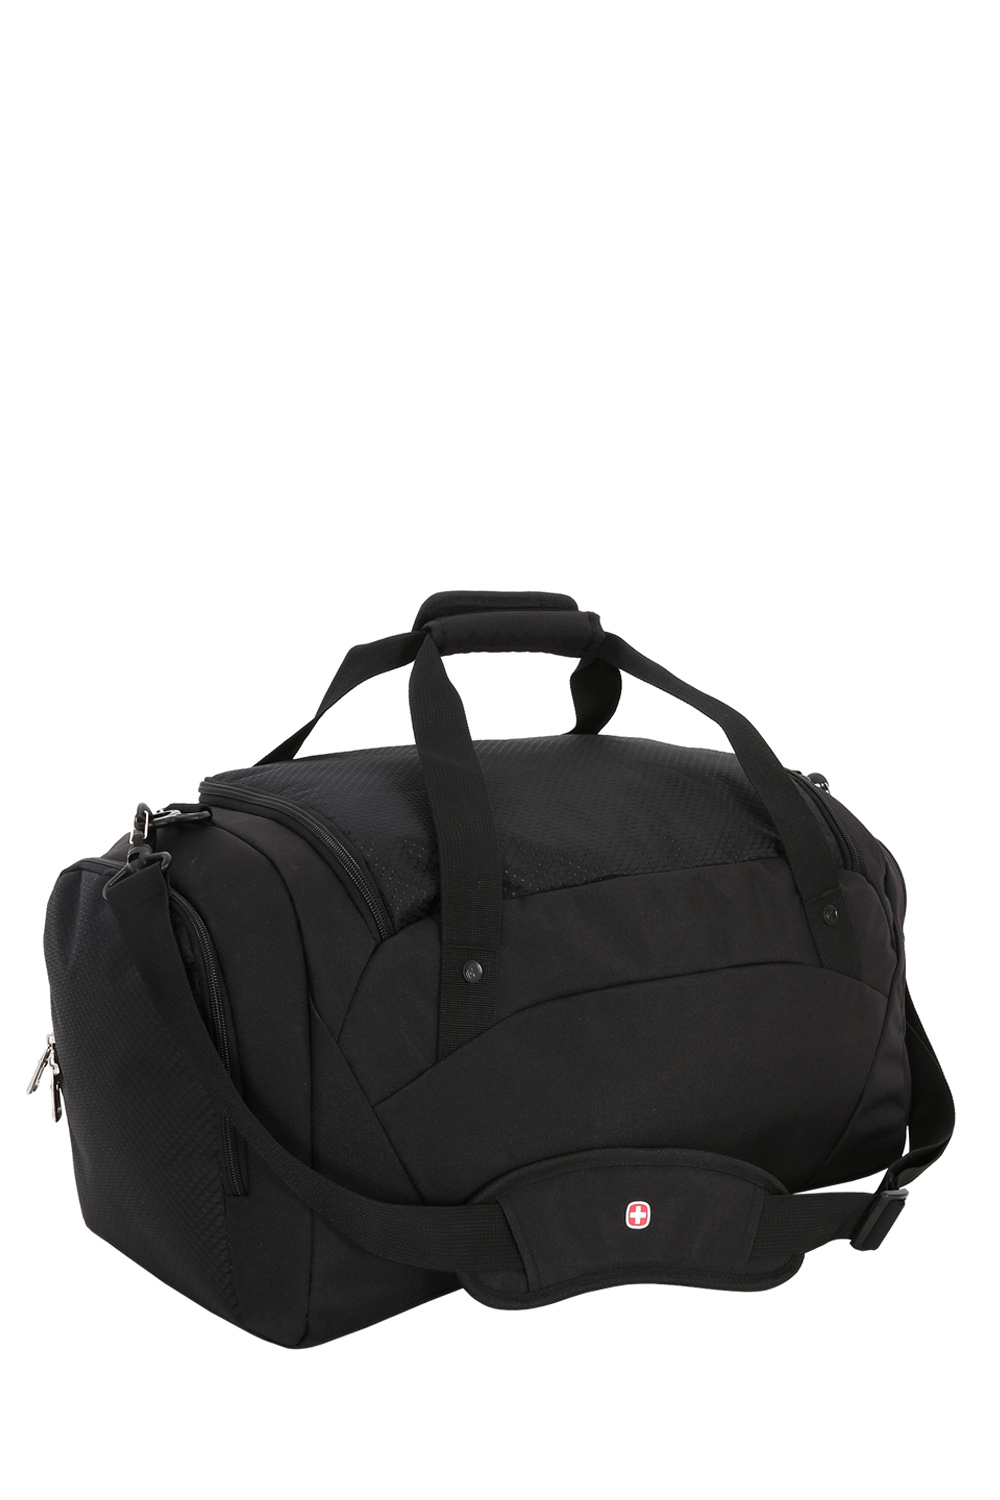 Swissgear 9000 28 Apex Duffel Bag  Charcoal